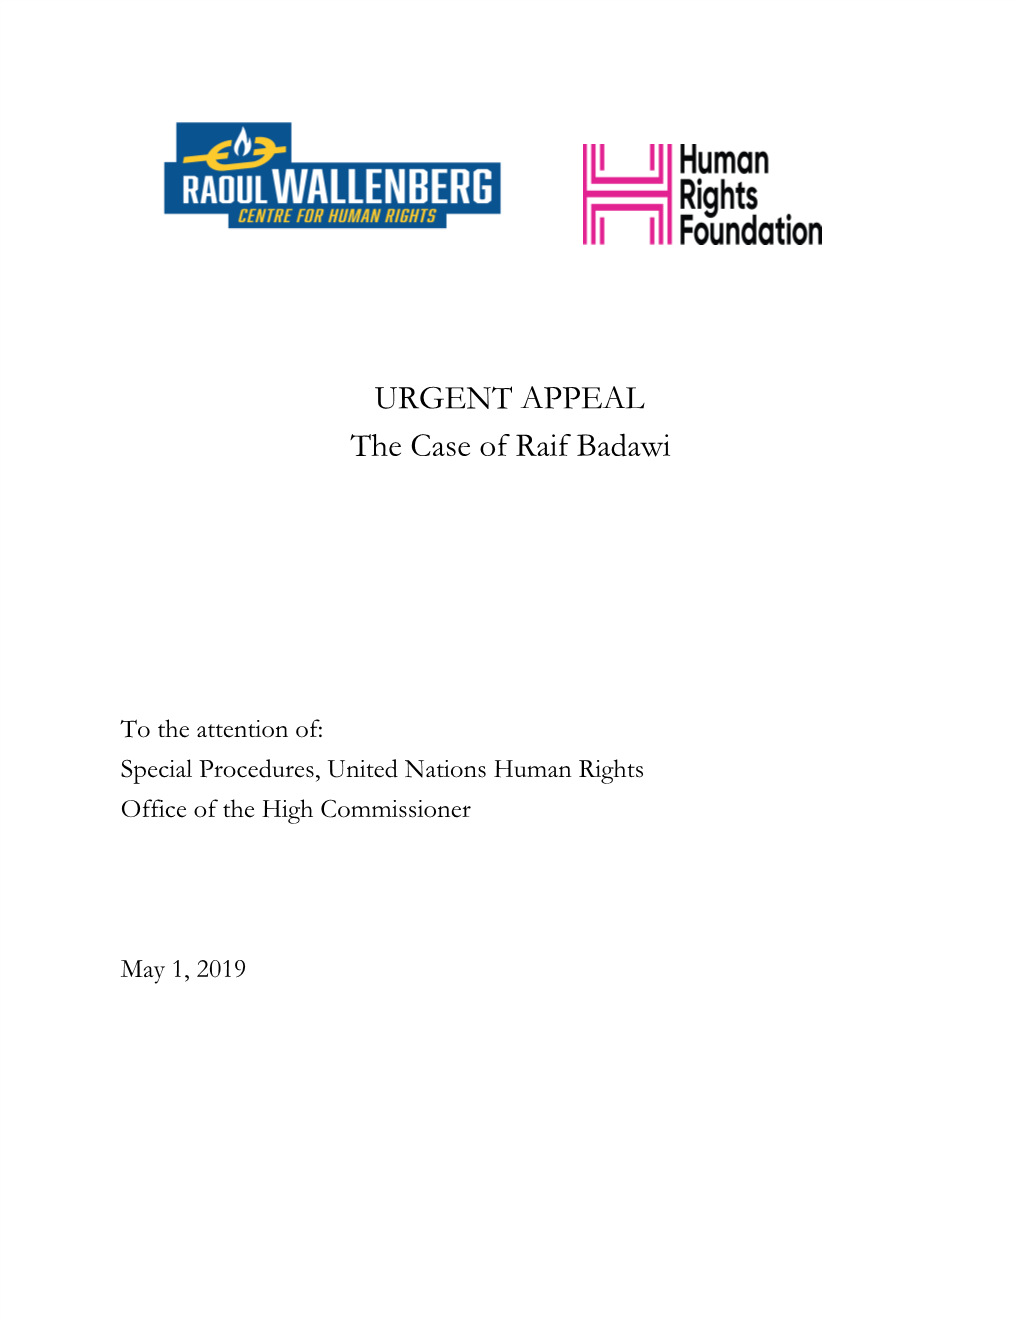 URGENT APPEAL the Case of Raif Badawi